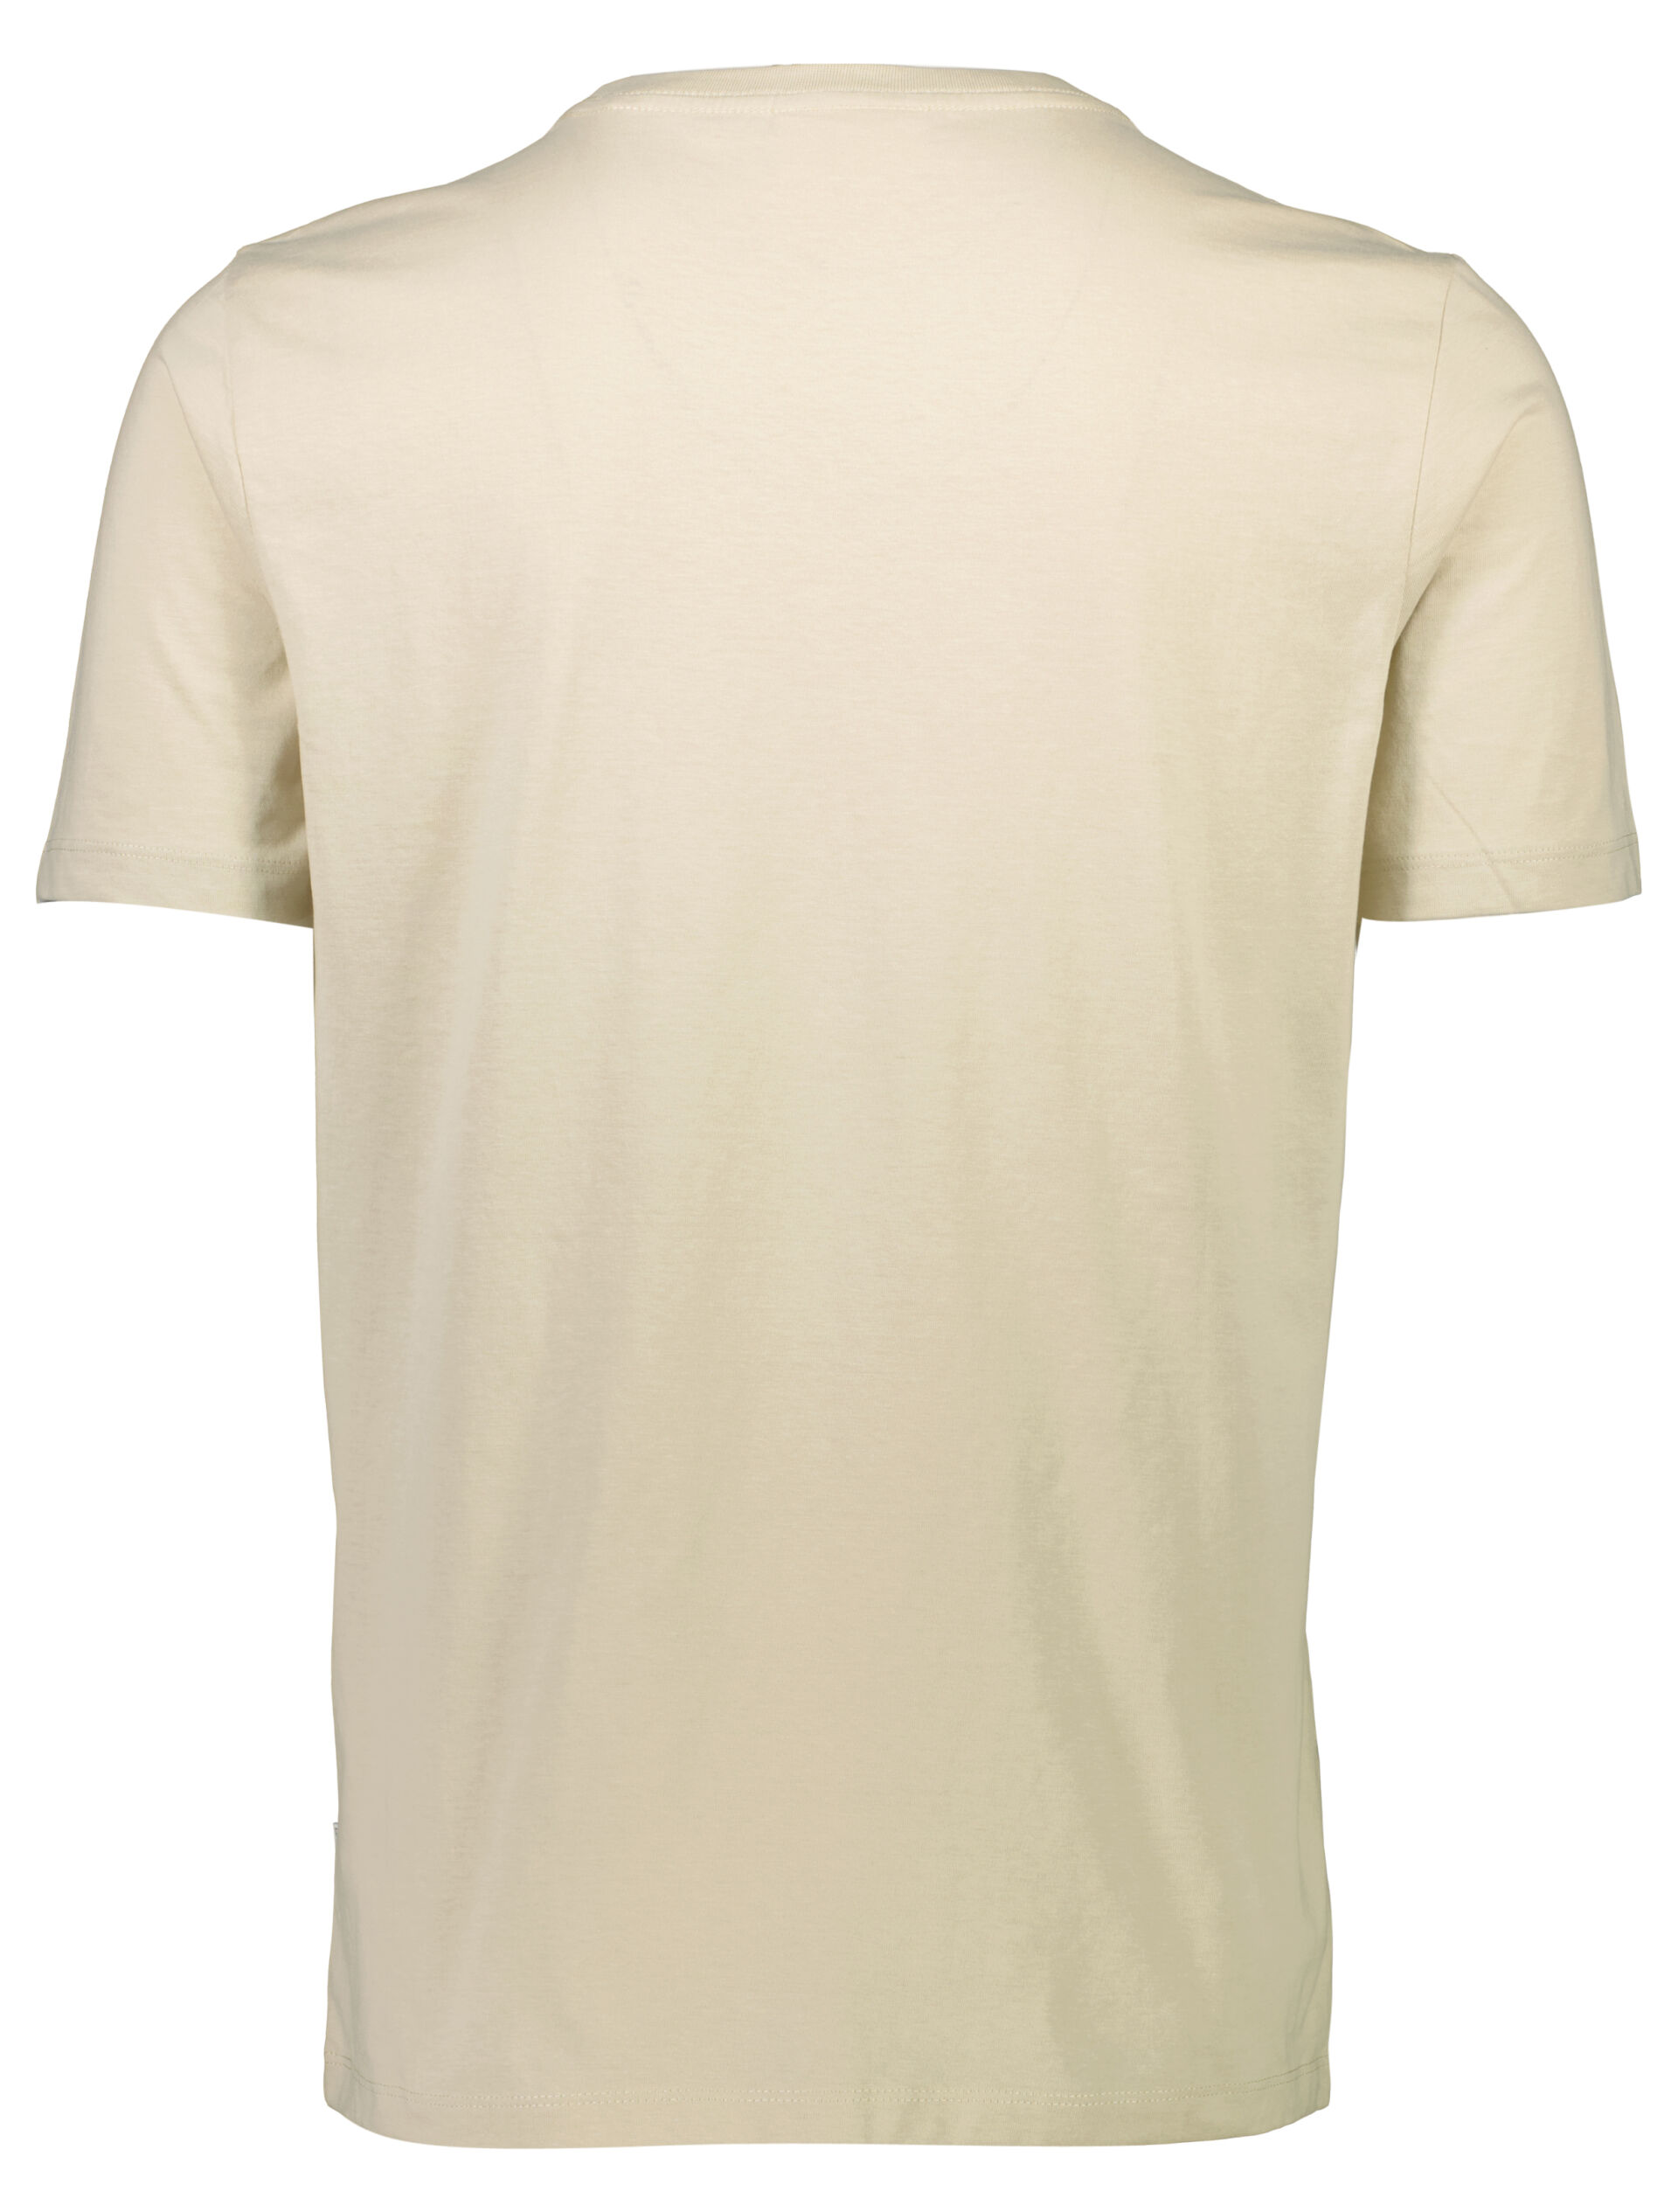 Lindbergh  T-shirt 30-400200B